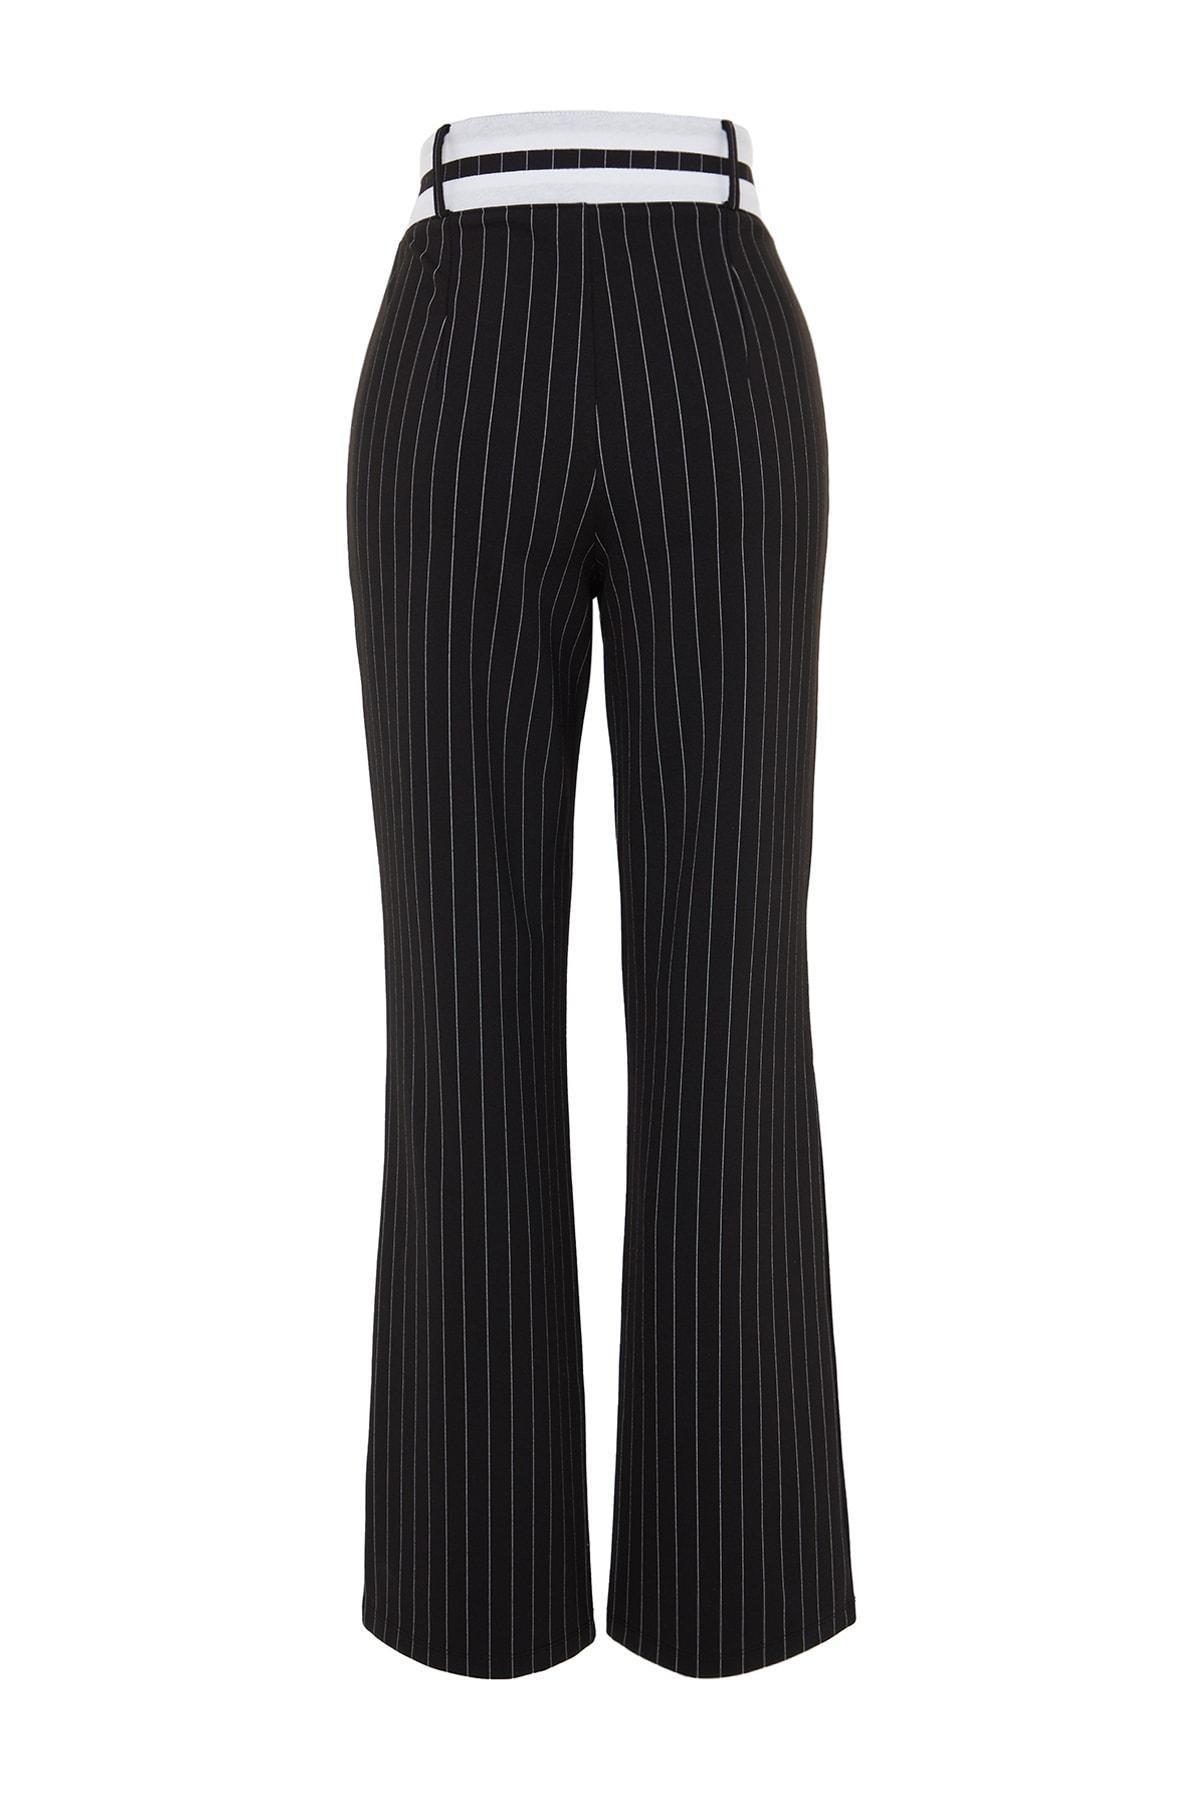 Trendyol - Black Striped Straight Pants